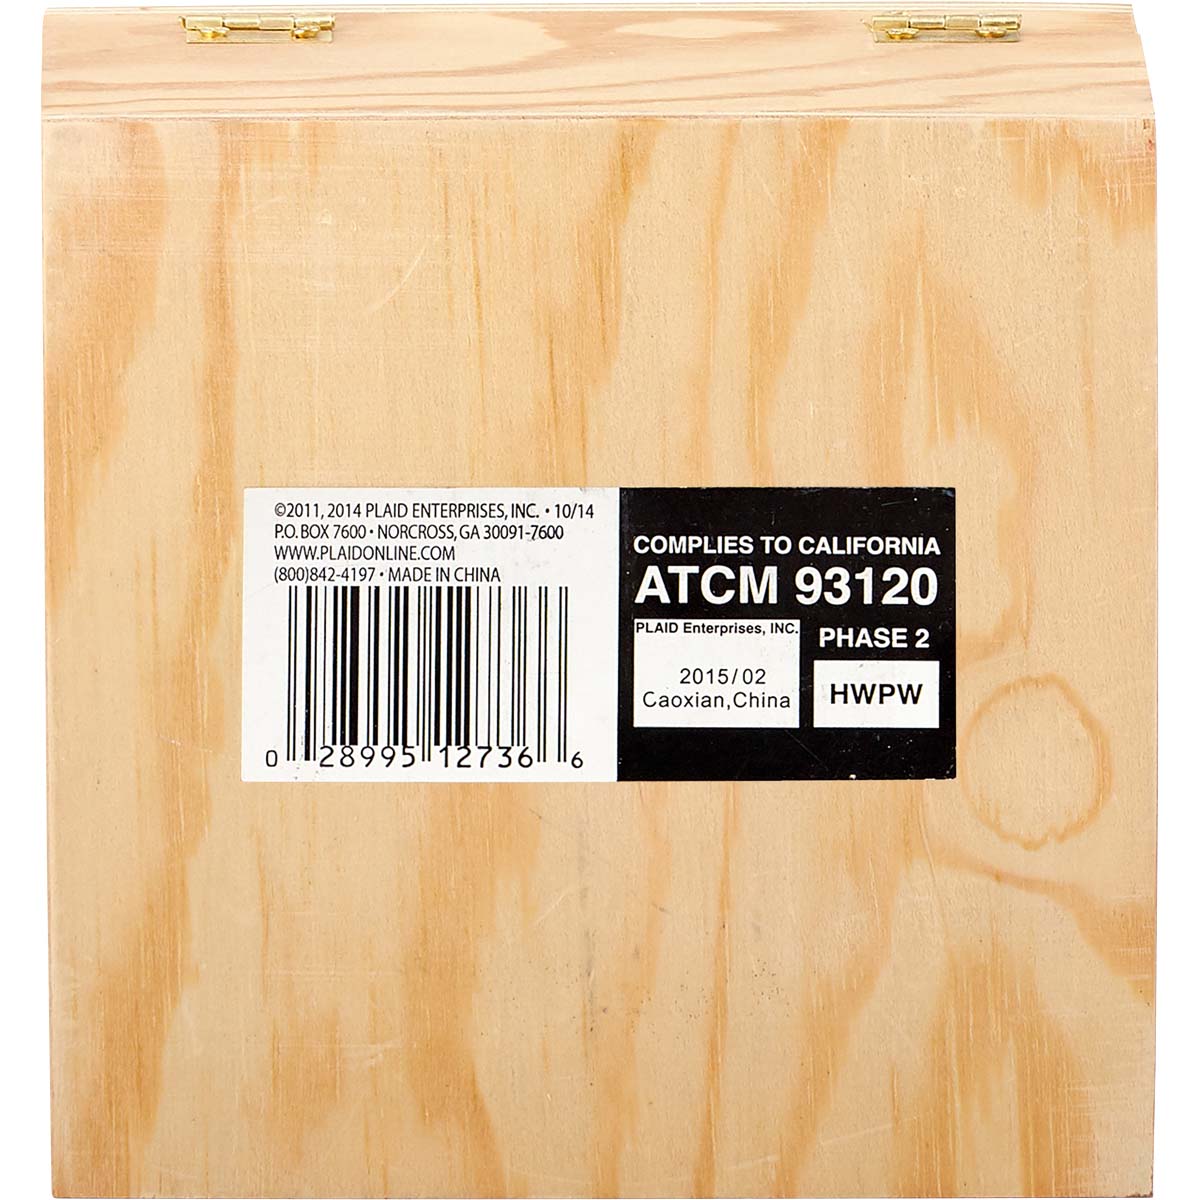 Plaid ® Wood Surfaces - Heart Box - 12736